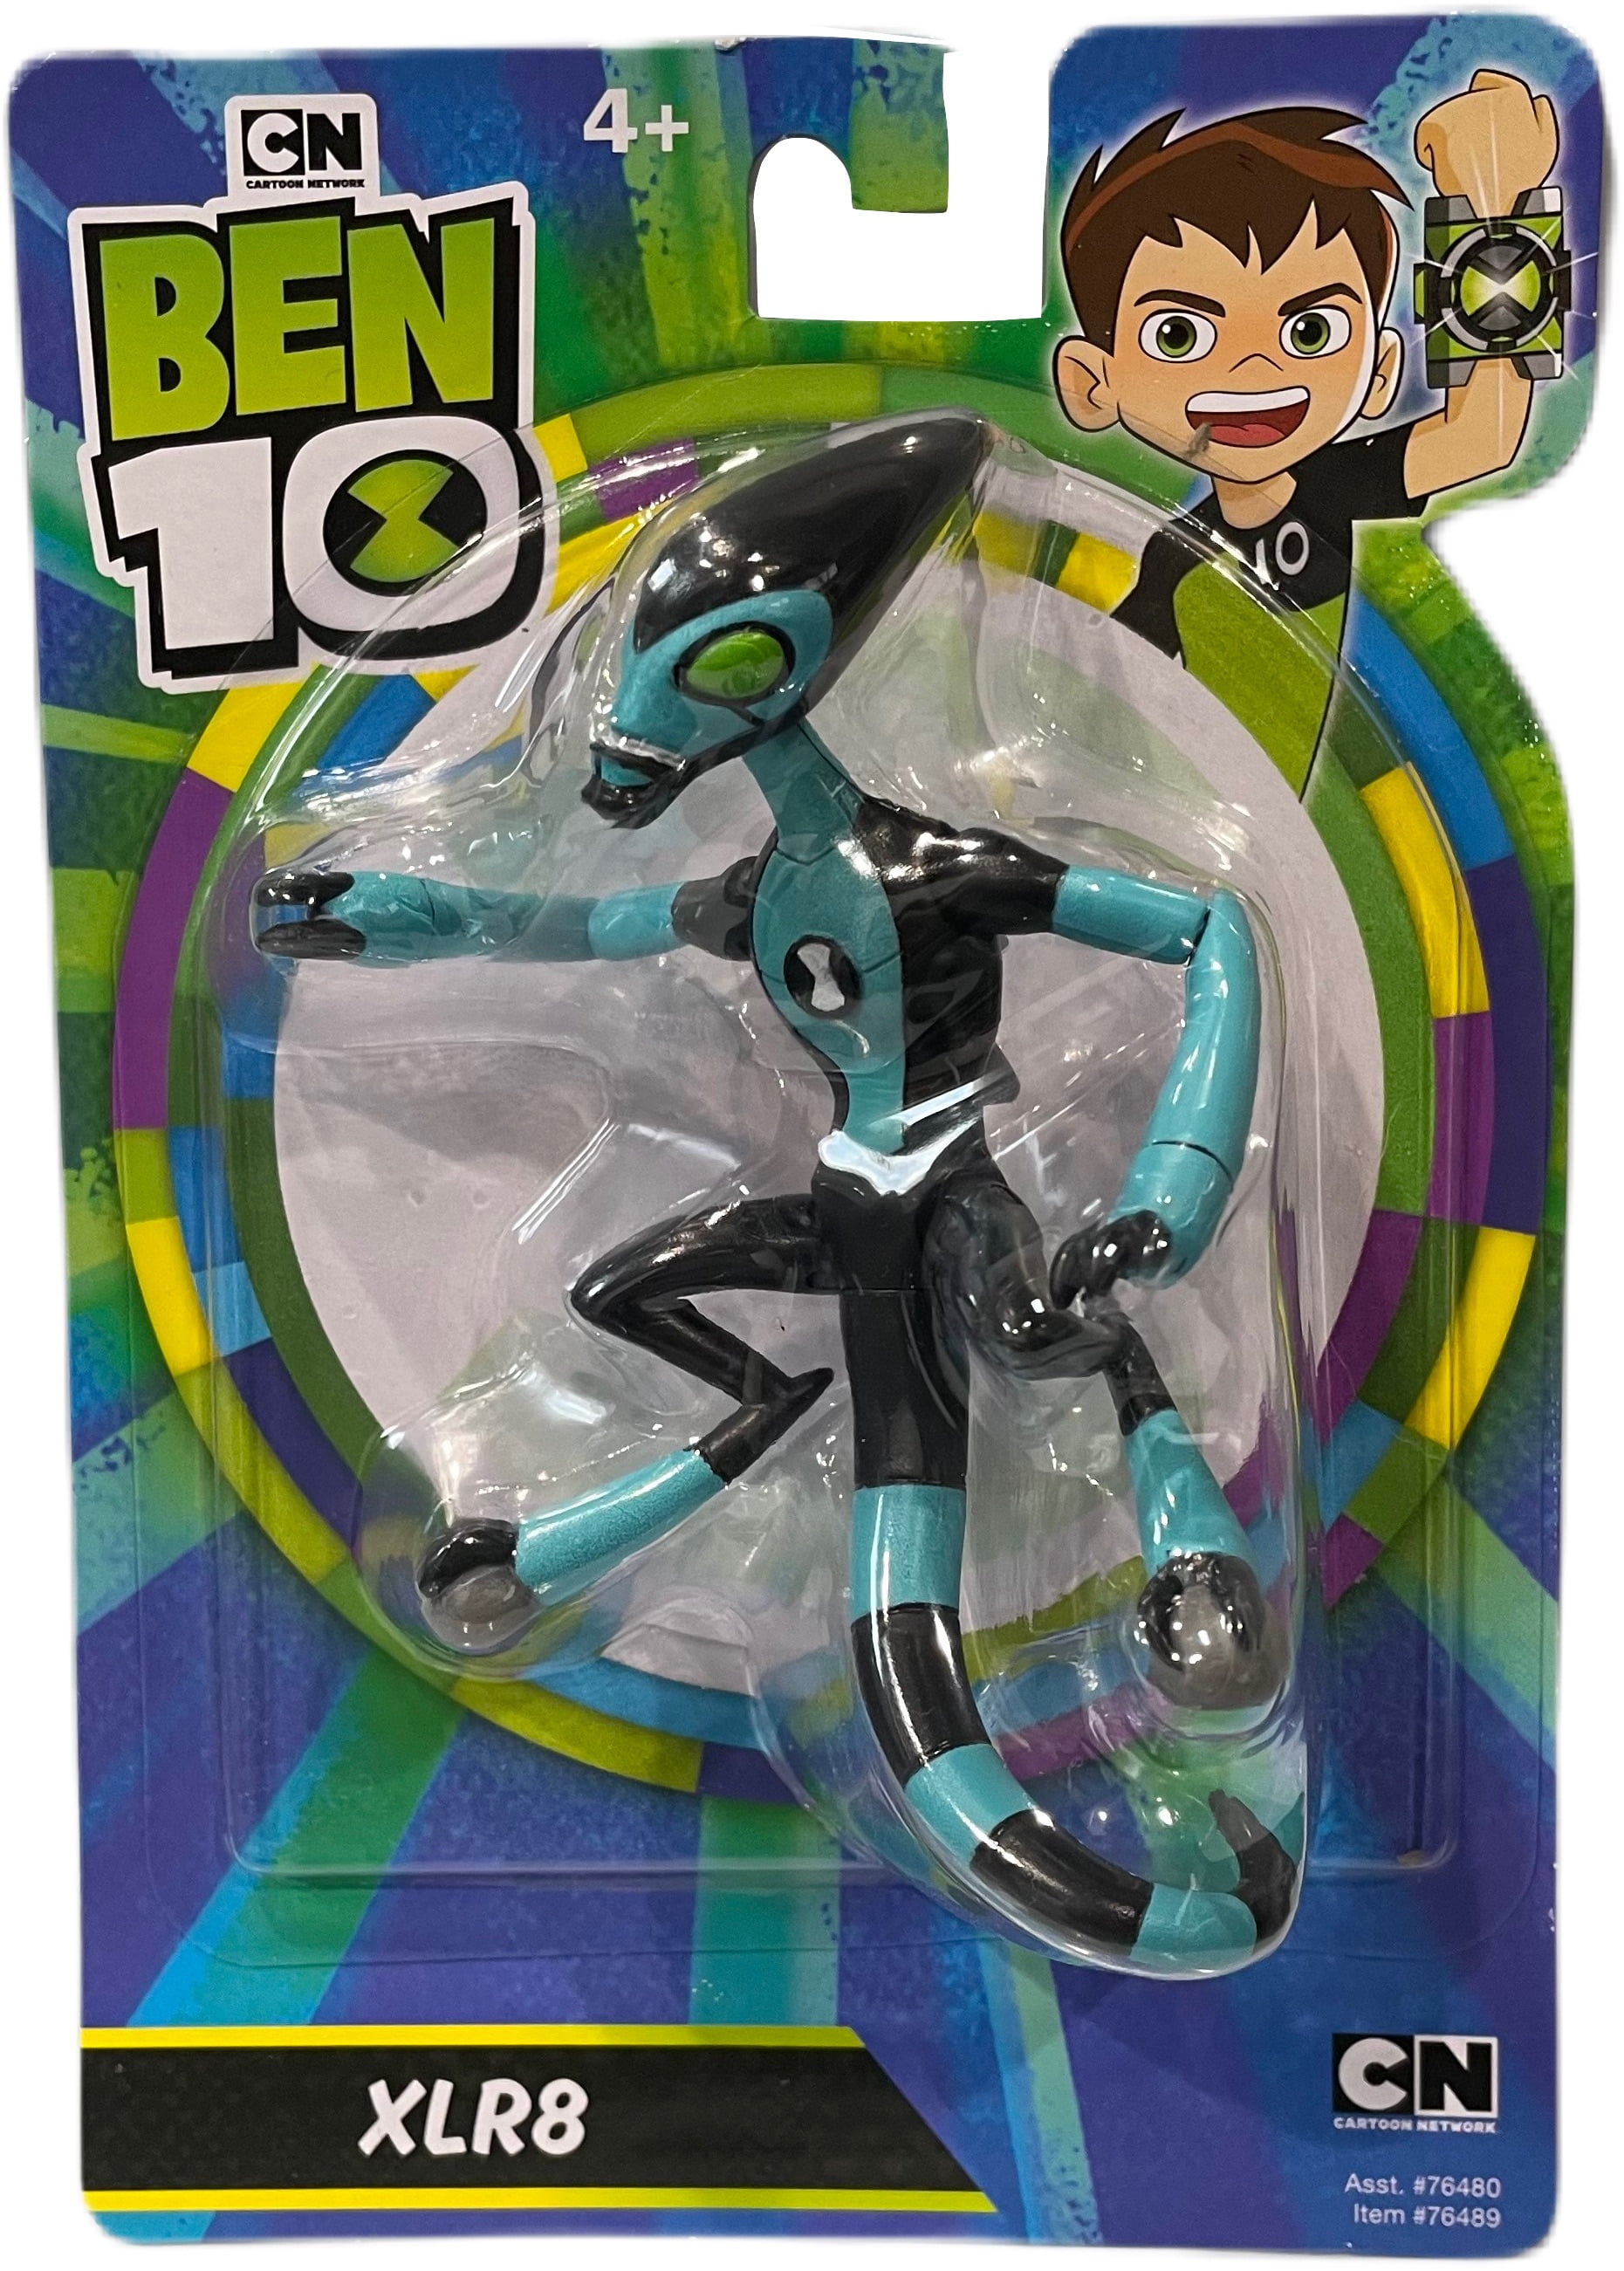 Ben 10 Alien Force ALIEN X figure with Exclusive Trading Card ben10 villain  toy